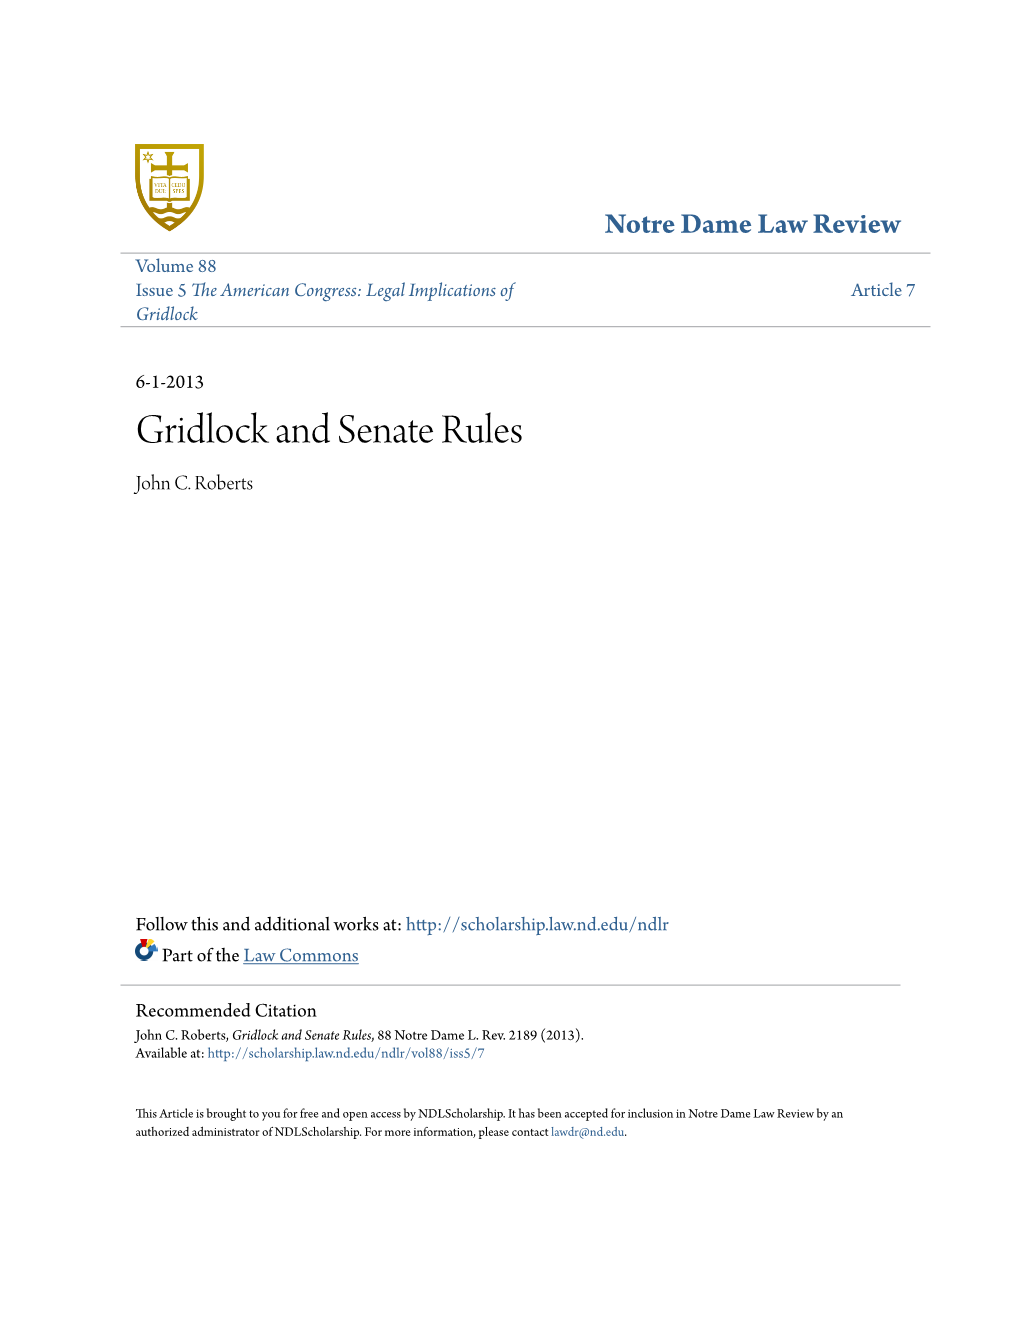 Gridlock and Senate Rules John C